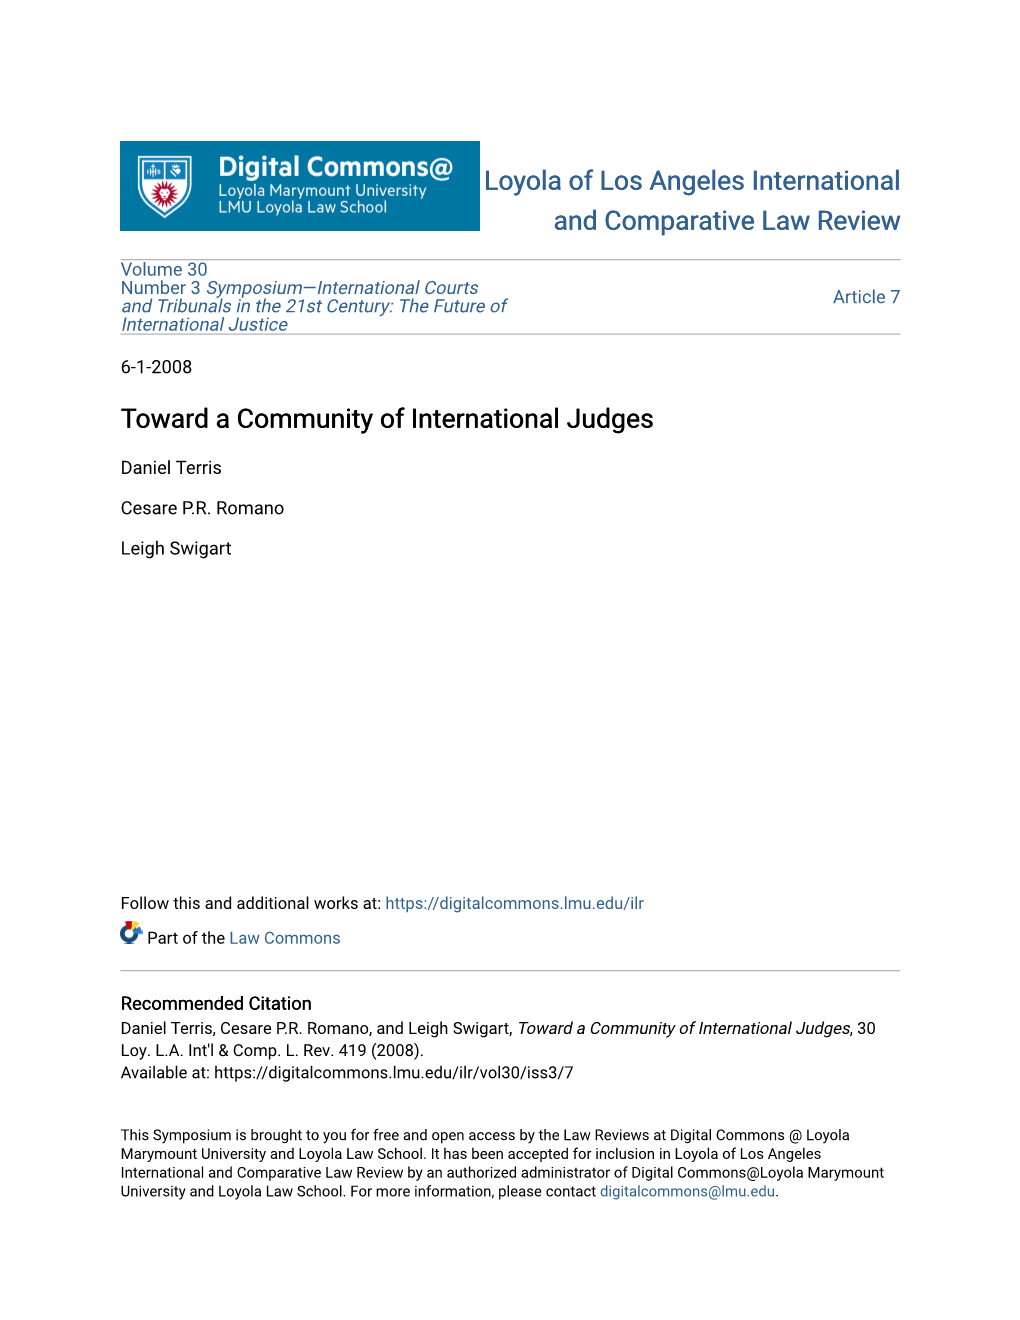 Toward a Community of International Judges